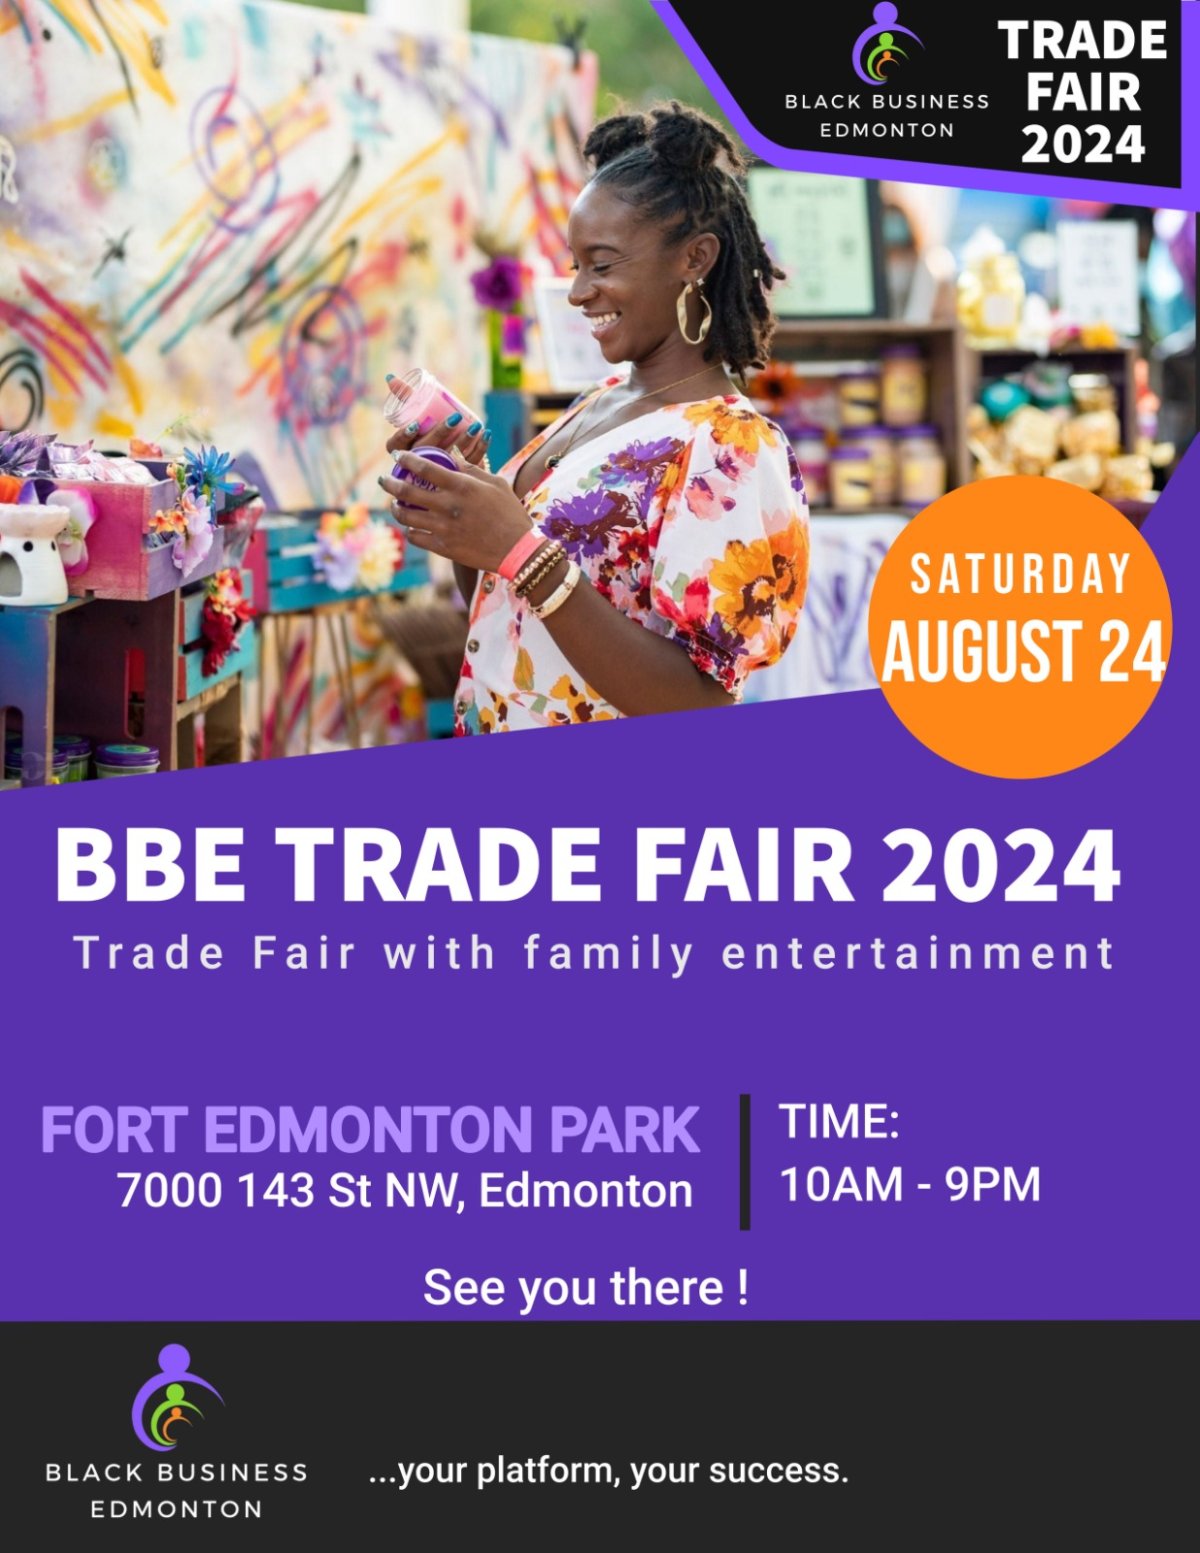 Black Business Edmonton Trade Fair 2024 - image